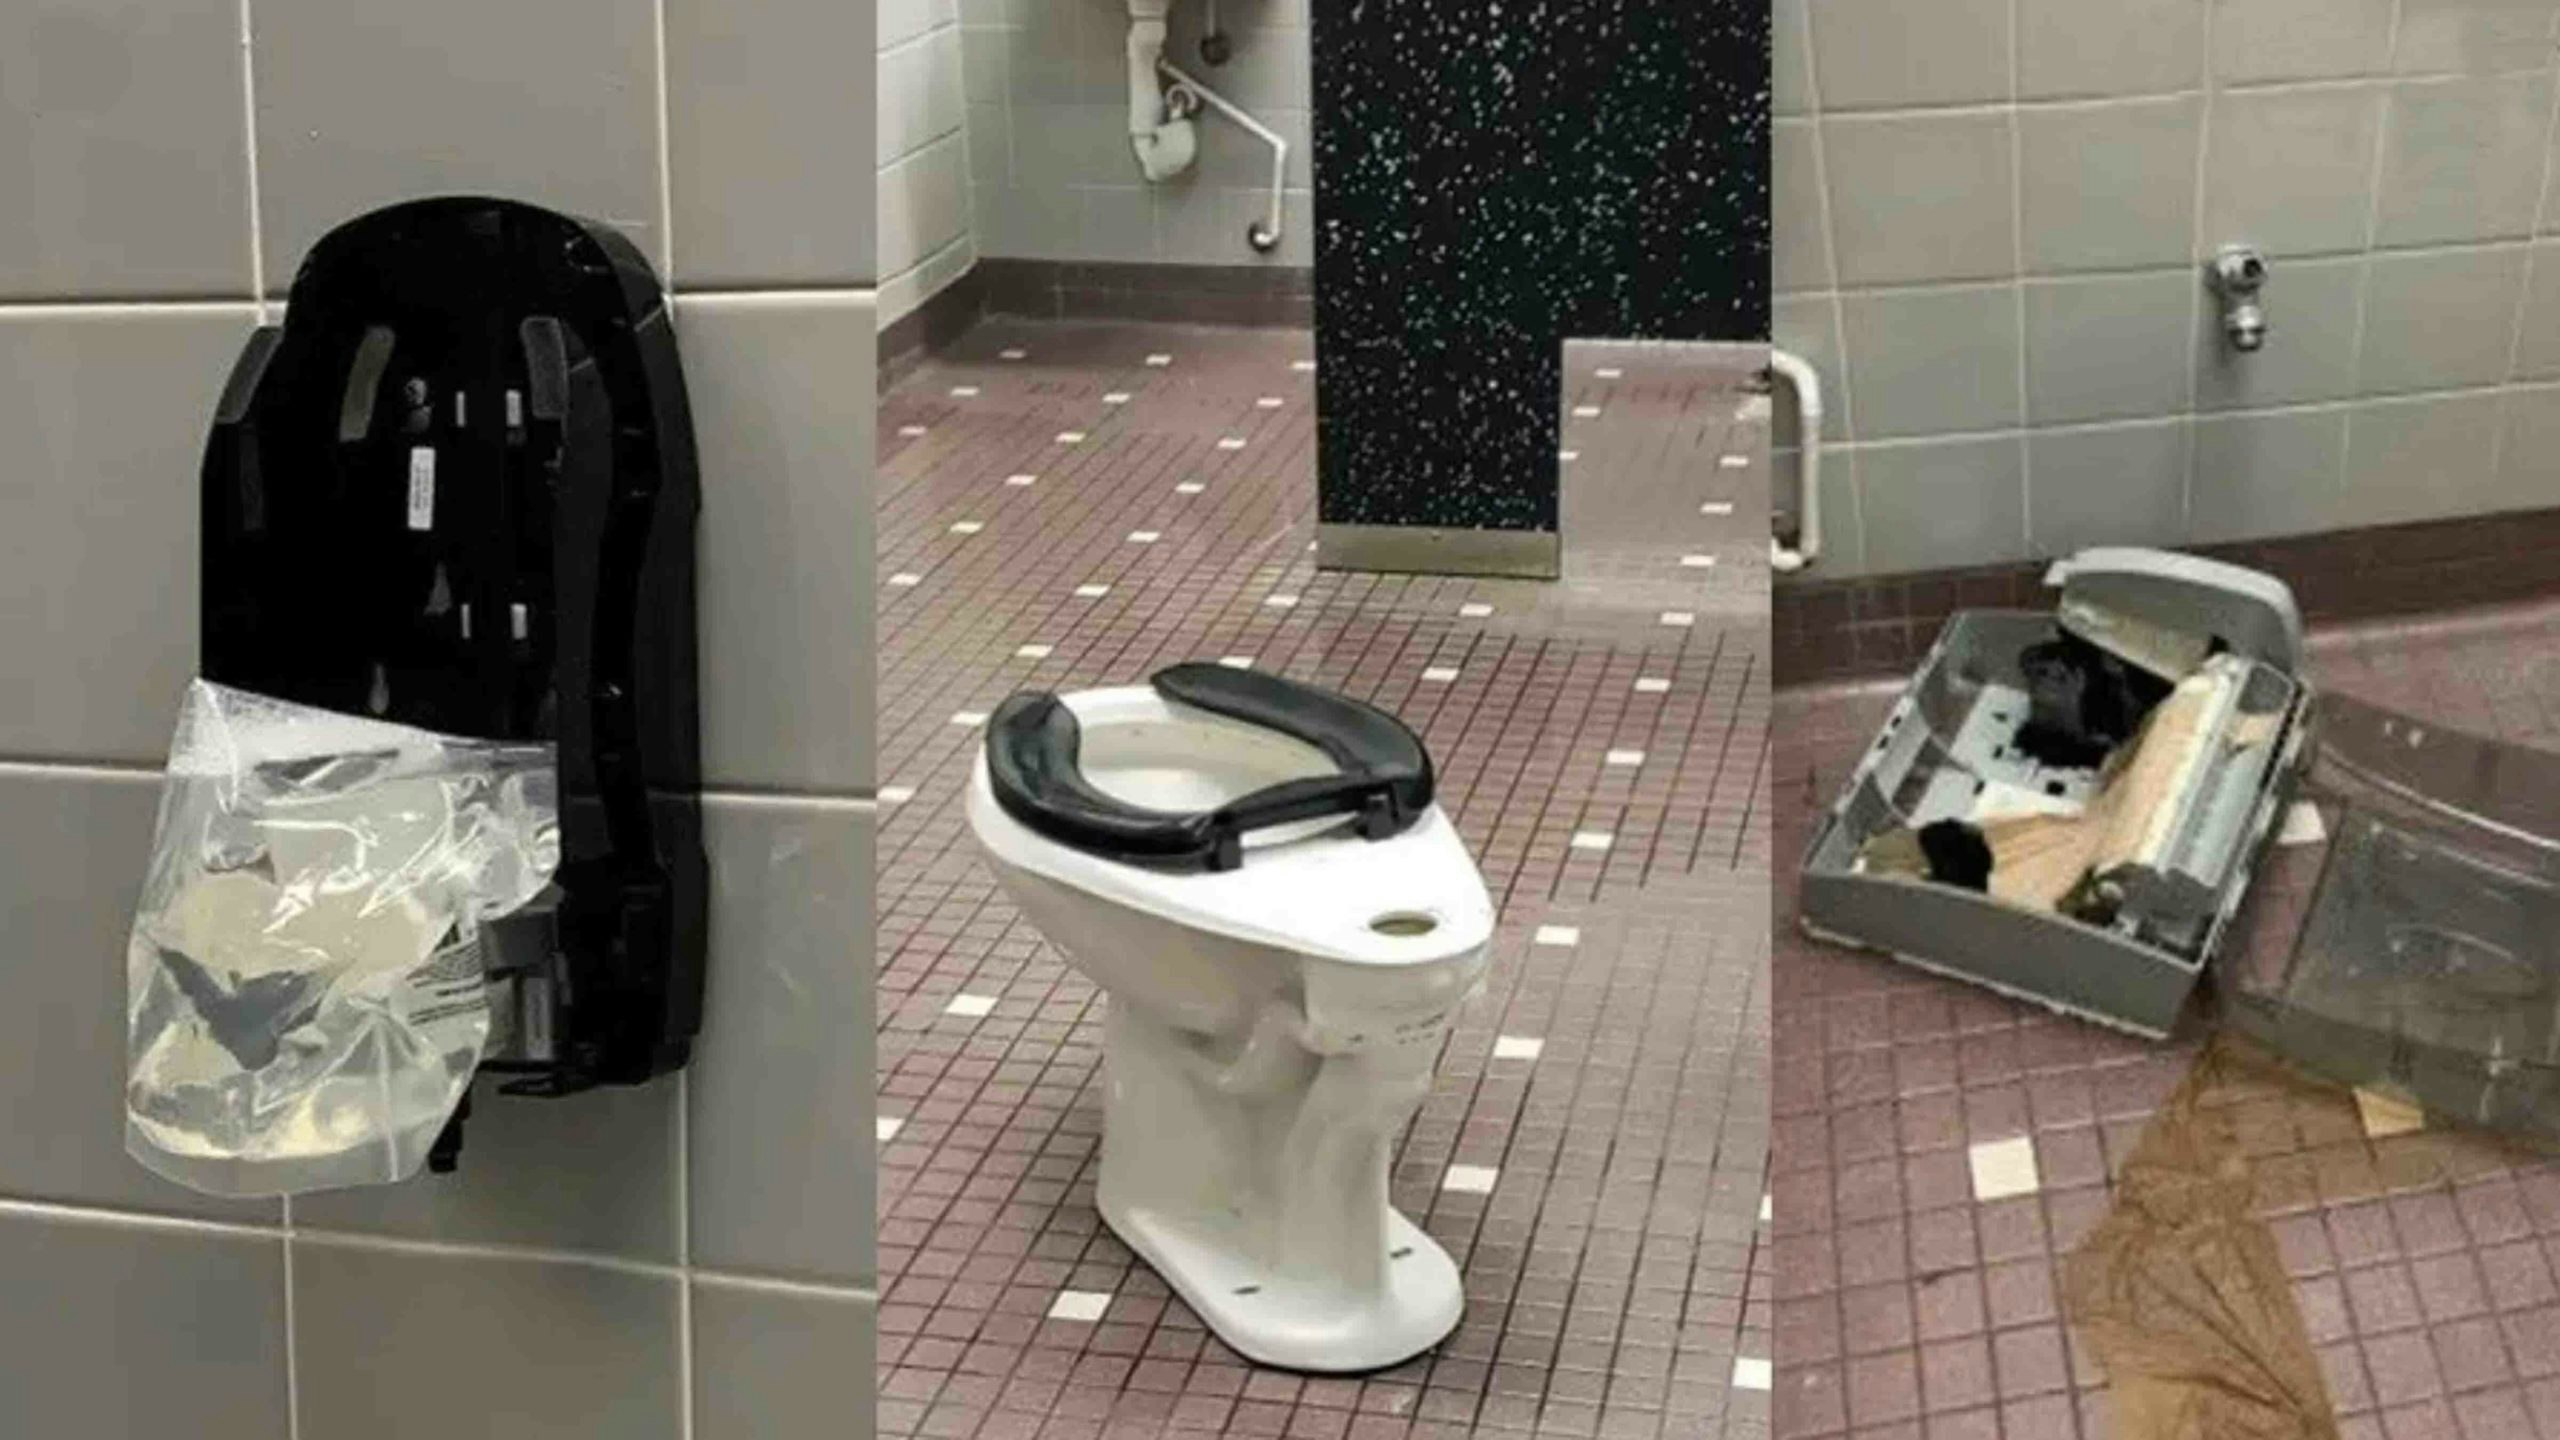 Destroyed bathroom scaled